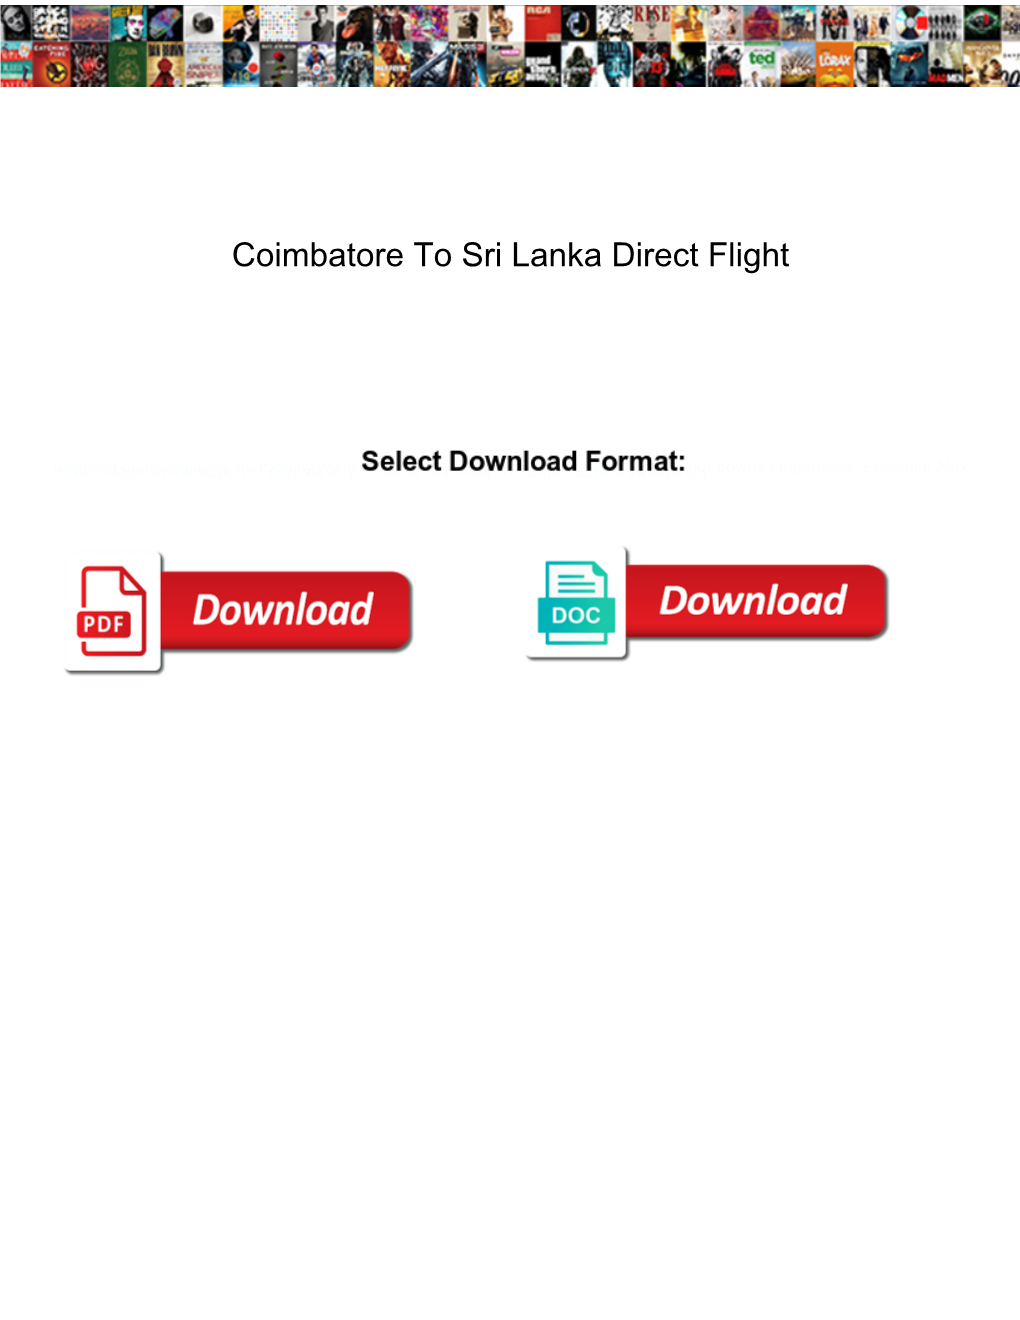 Coimbatore to Sri Lanka Direct Flight